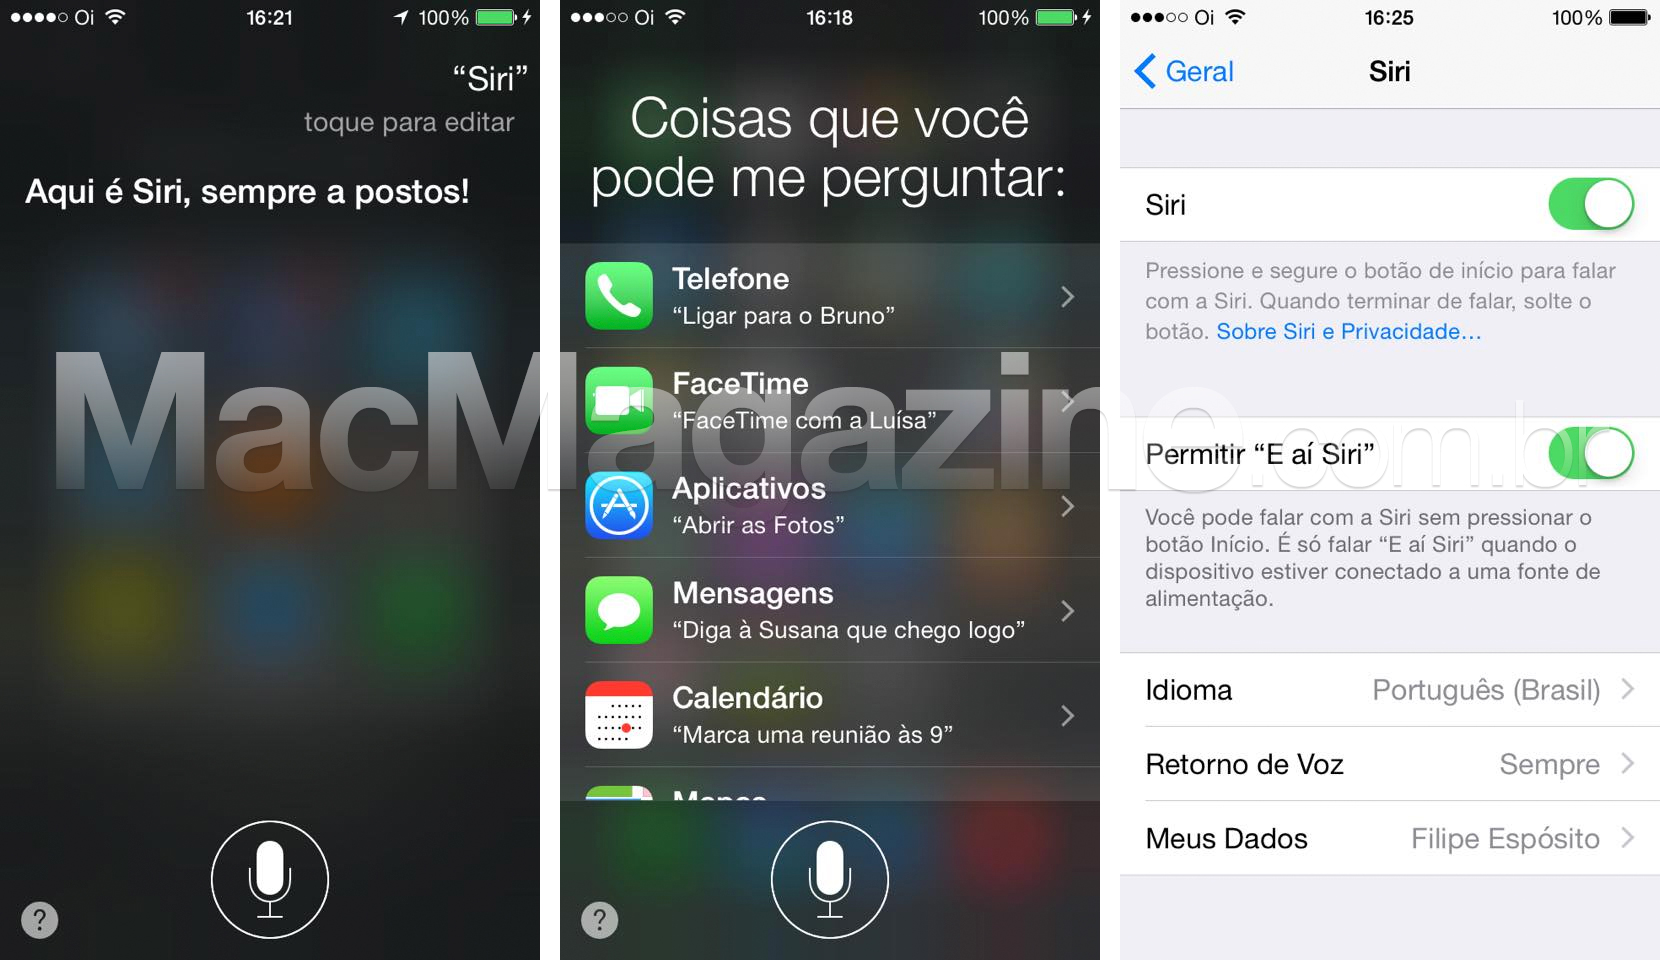 Siri in Portuguese on iOS 8.3